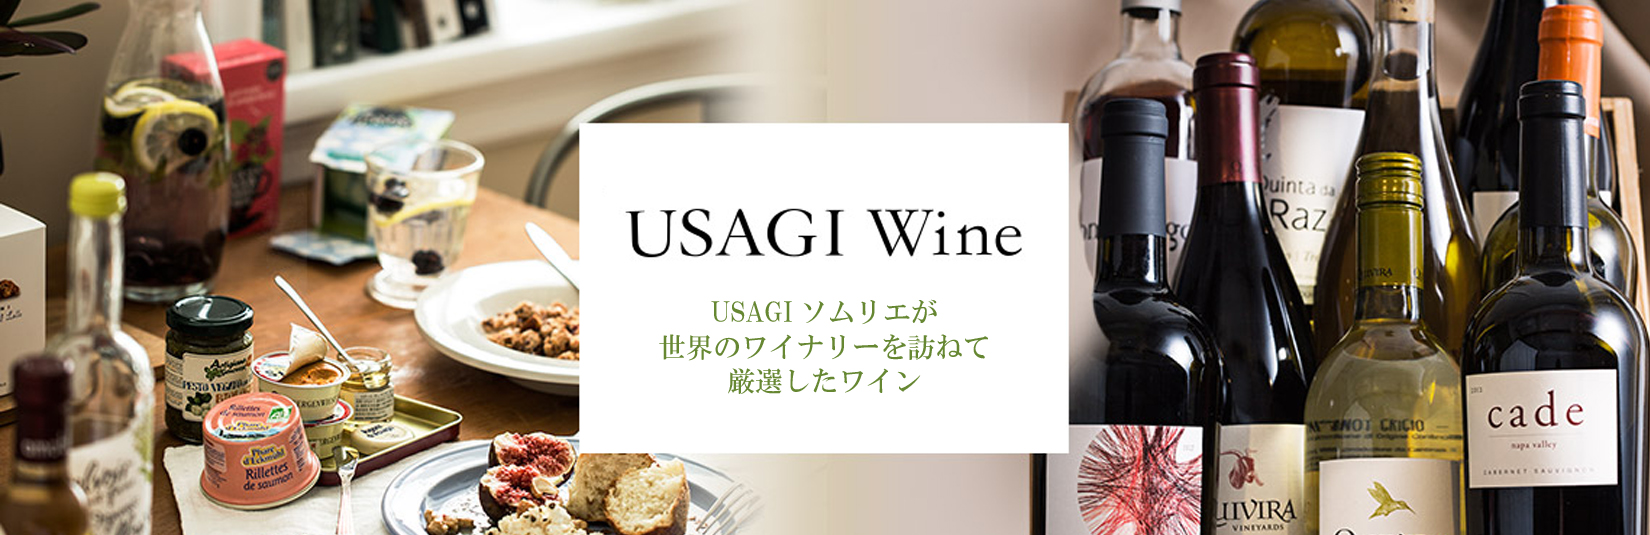 USAGI Wine(ウサギワイン)